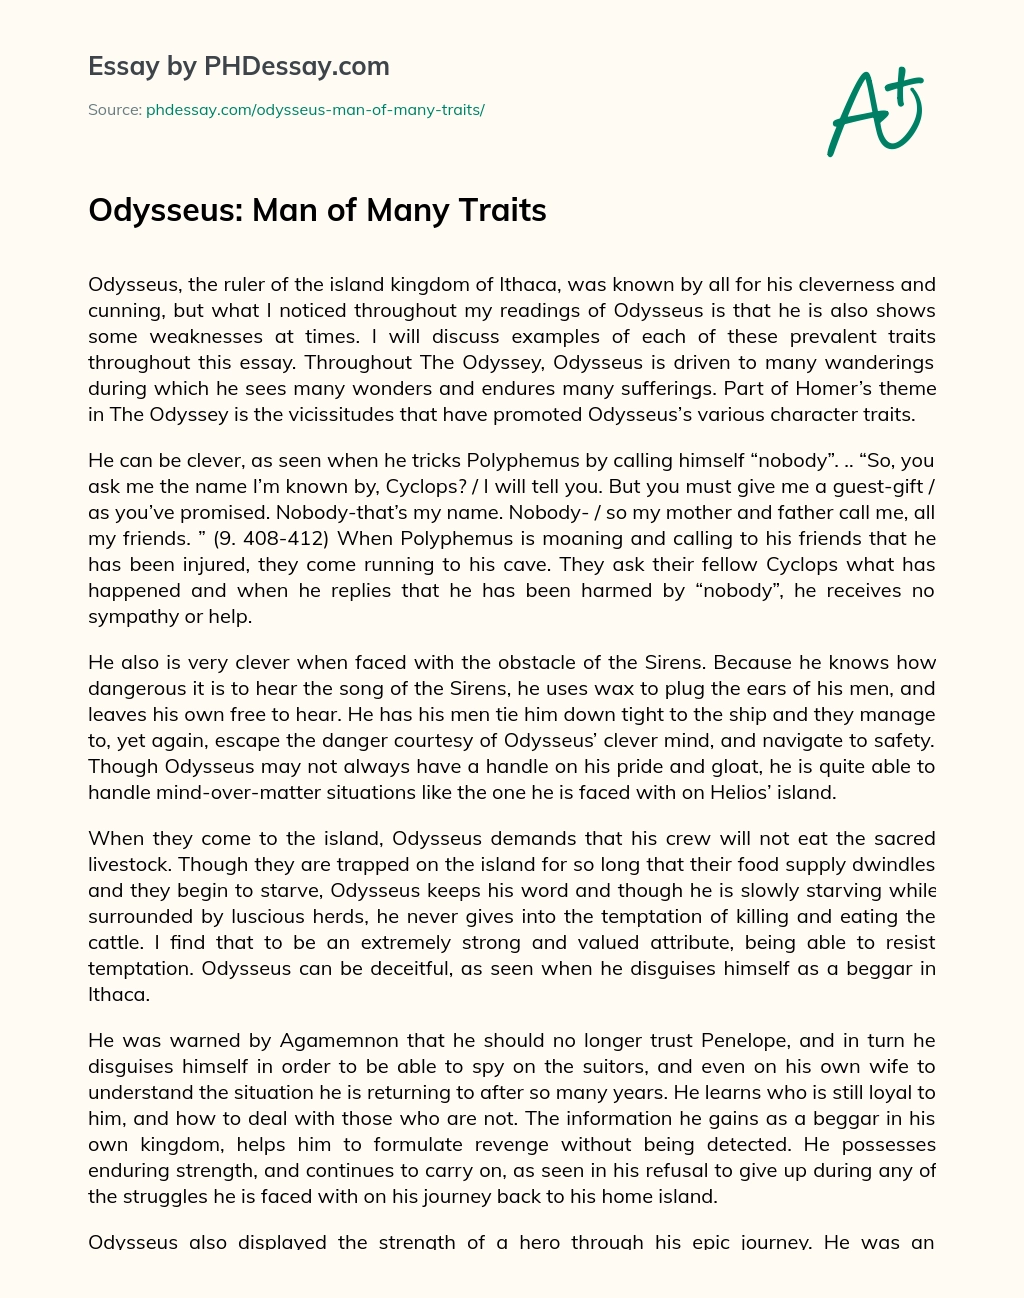 Odysseus: Man of Many Traits essay